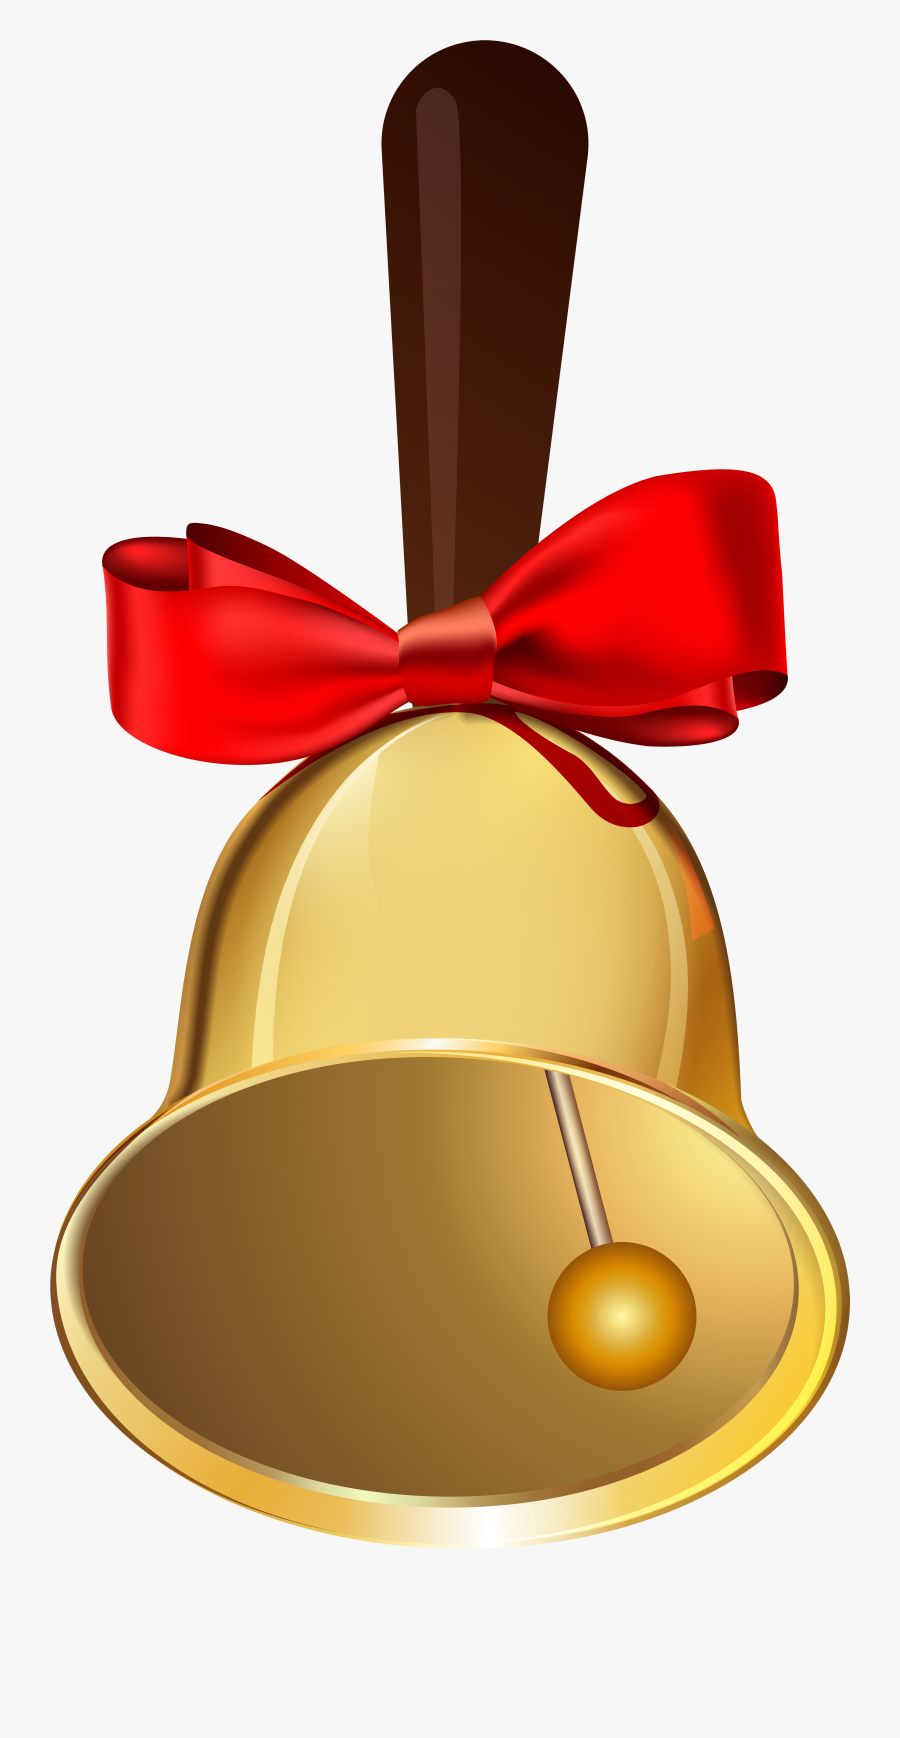 Gold Bell Png Clip Art Image - Bell Png Kids Clip Art, Transparent Clipart